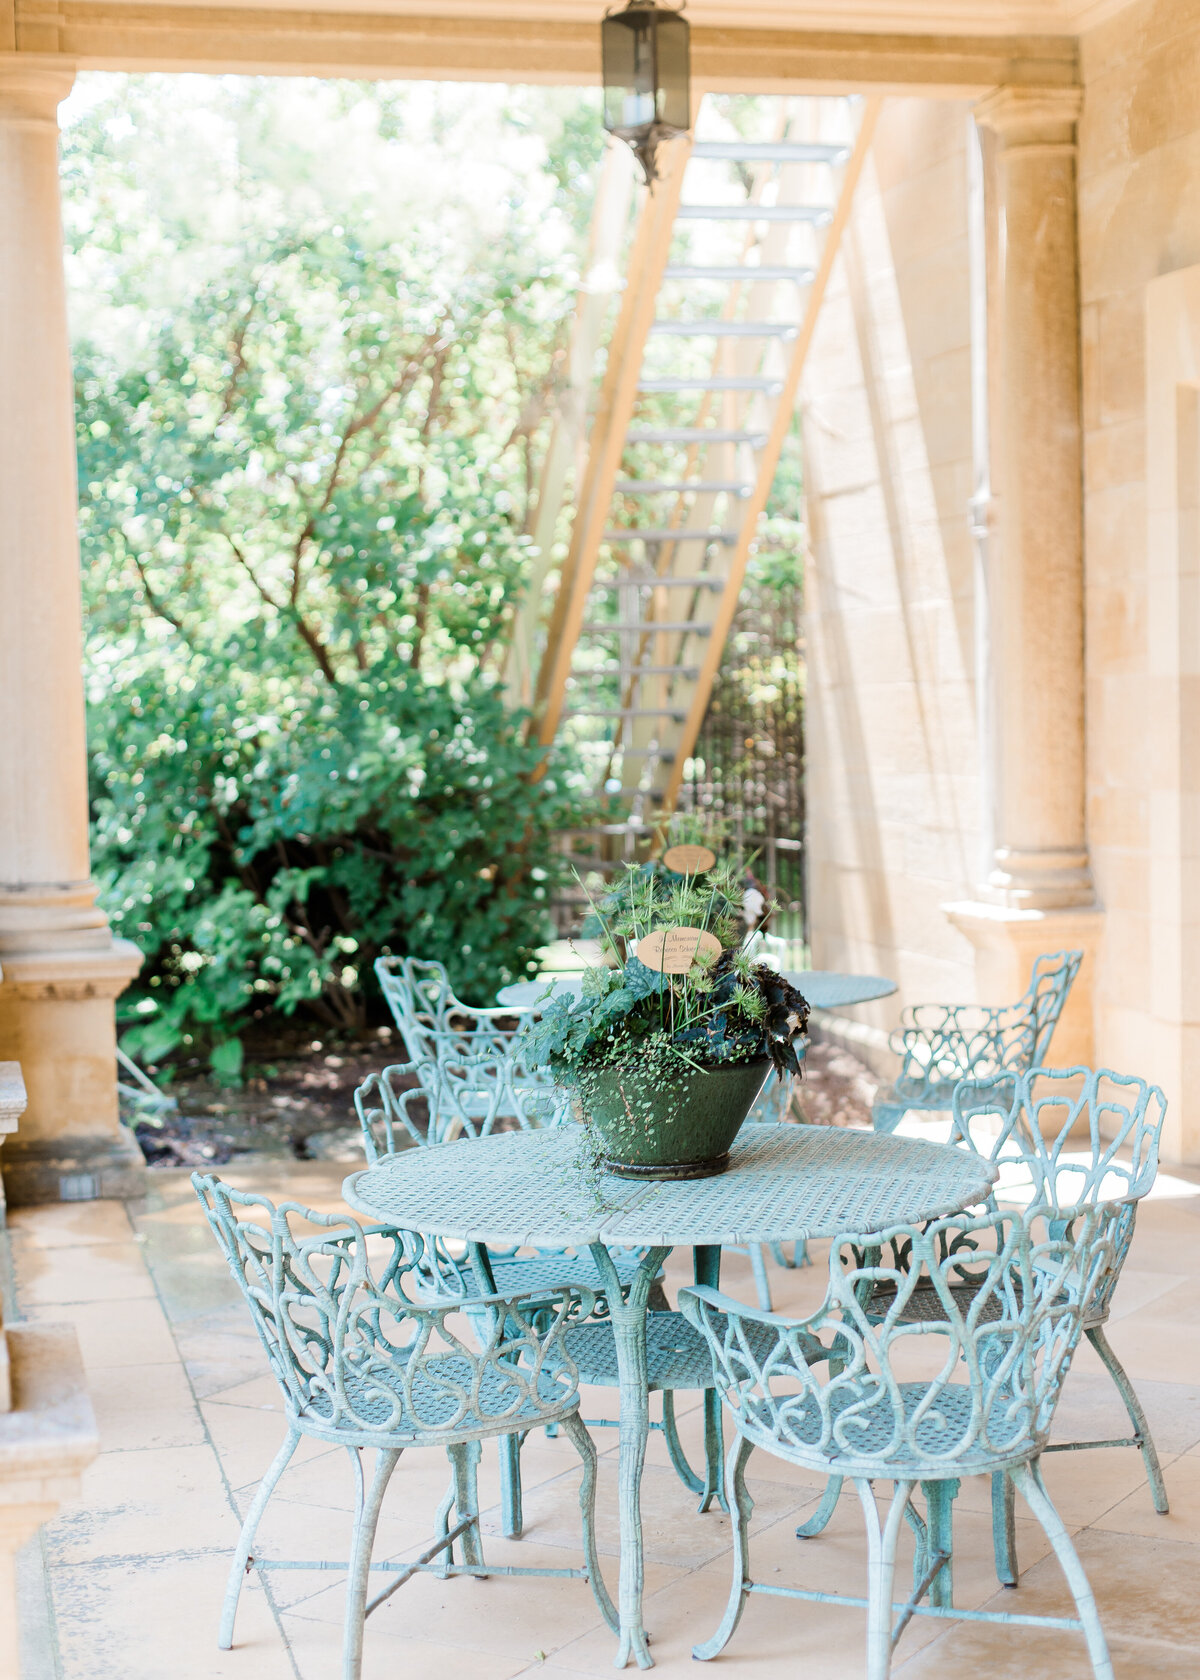 A sunny patio has a blue metal garden furniture set.